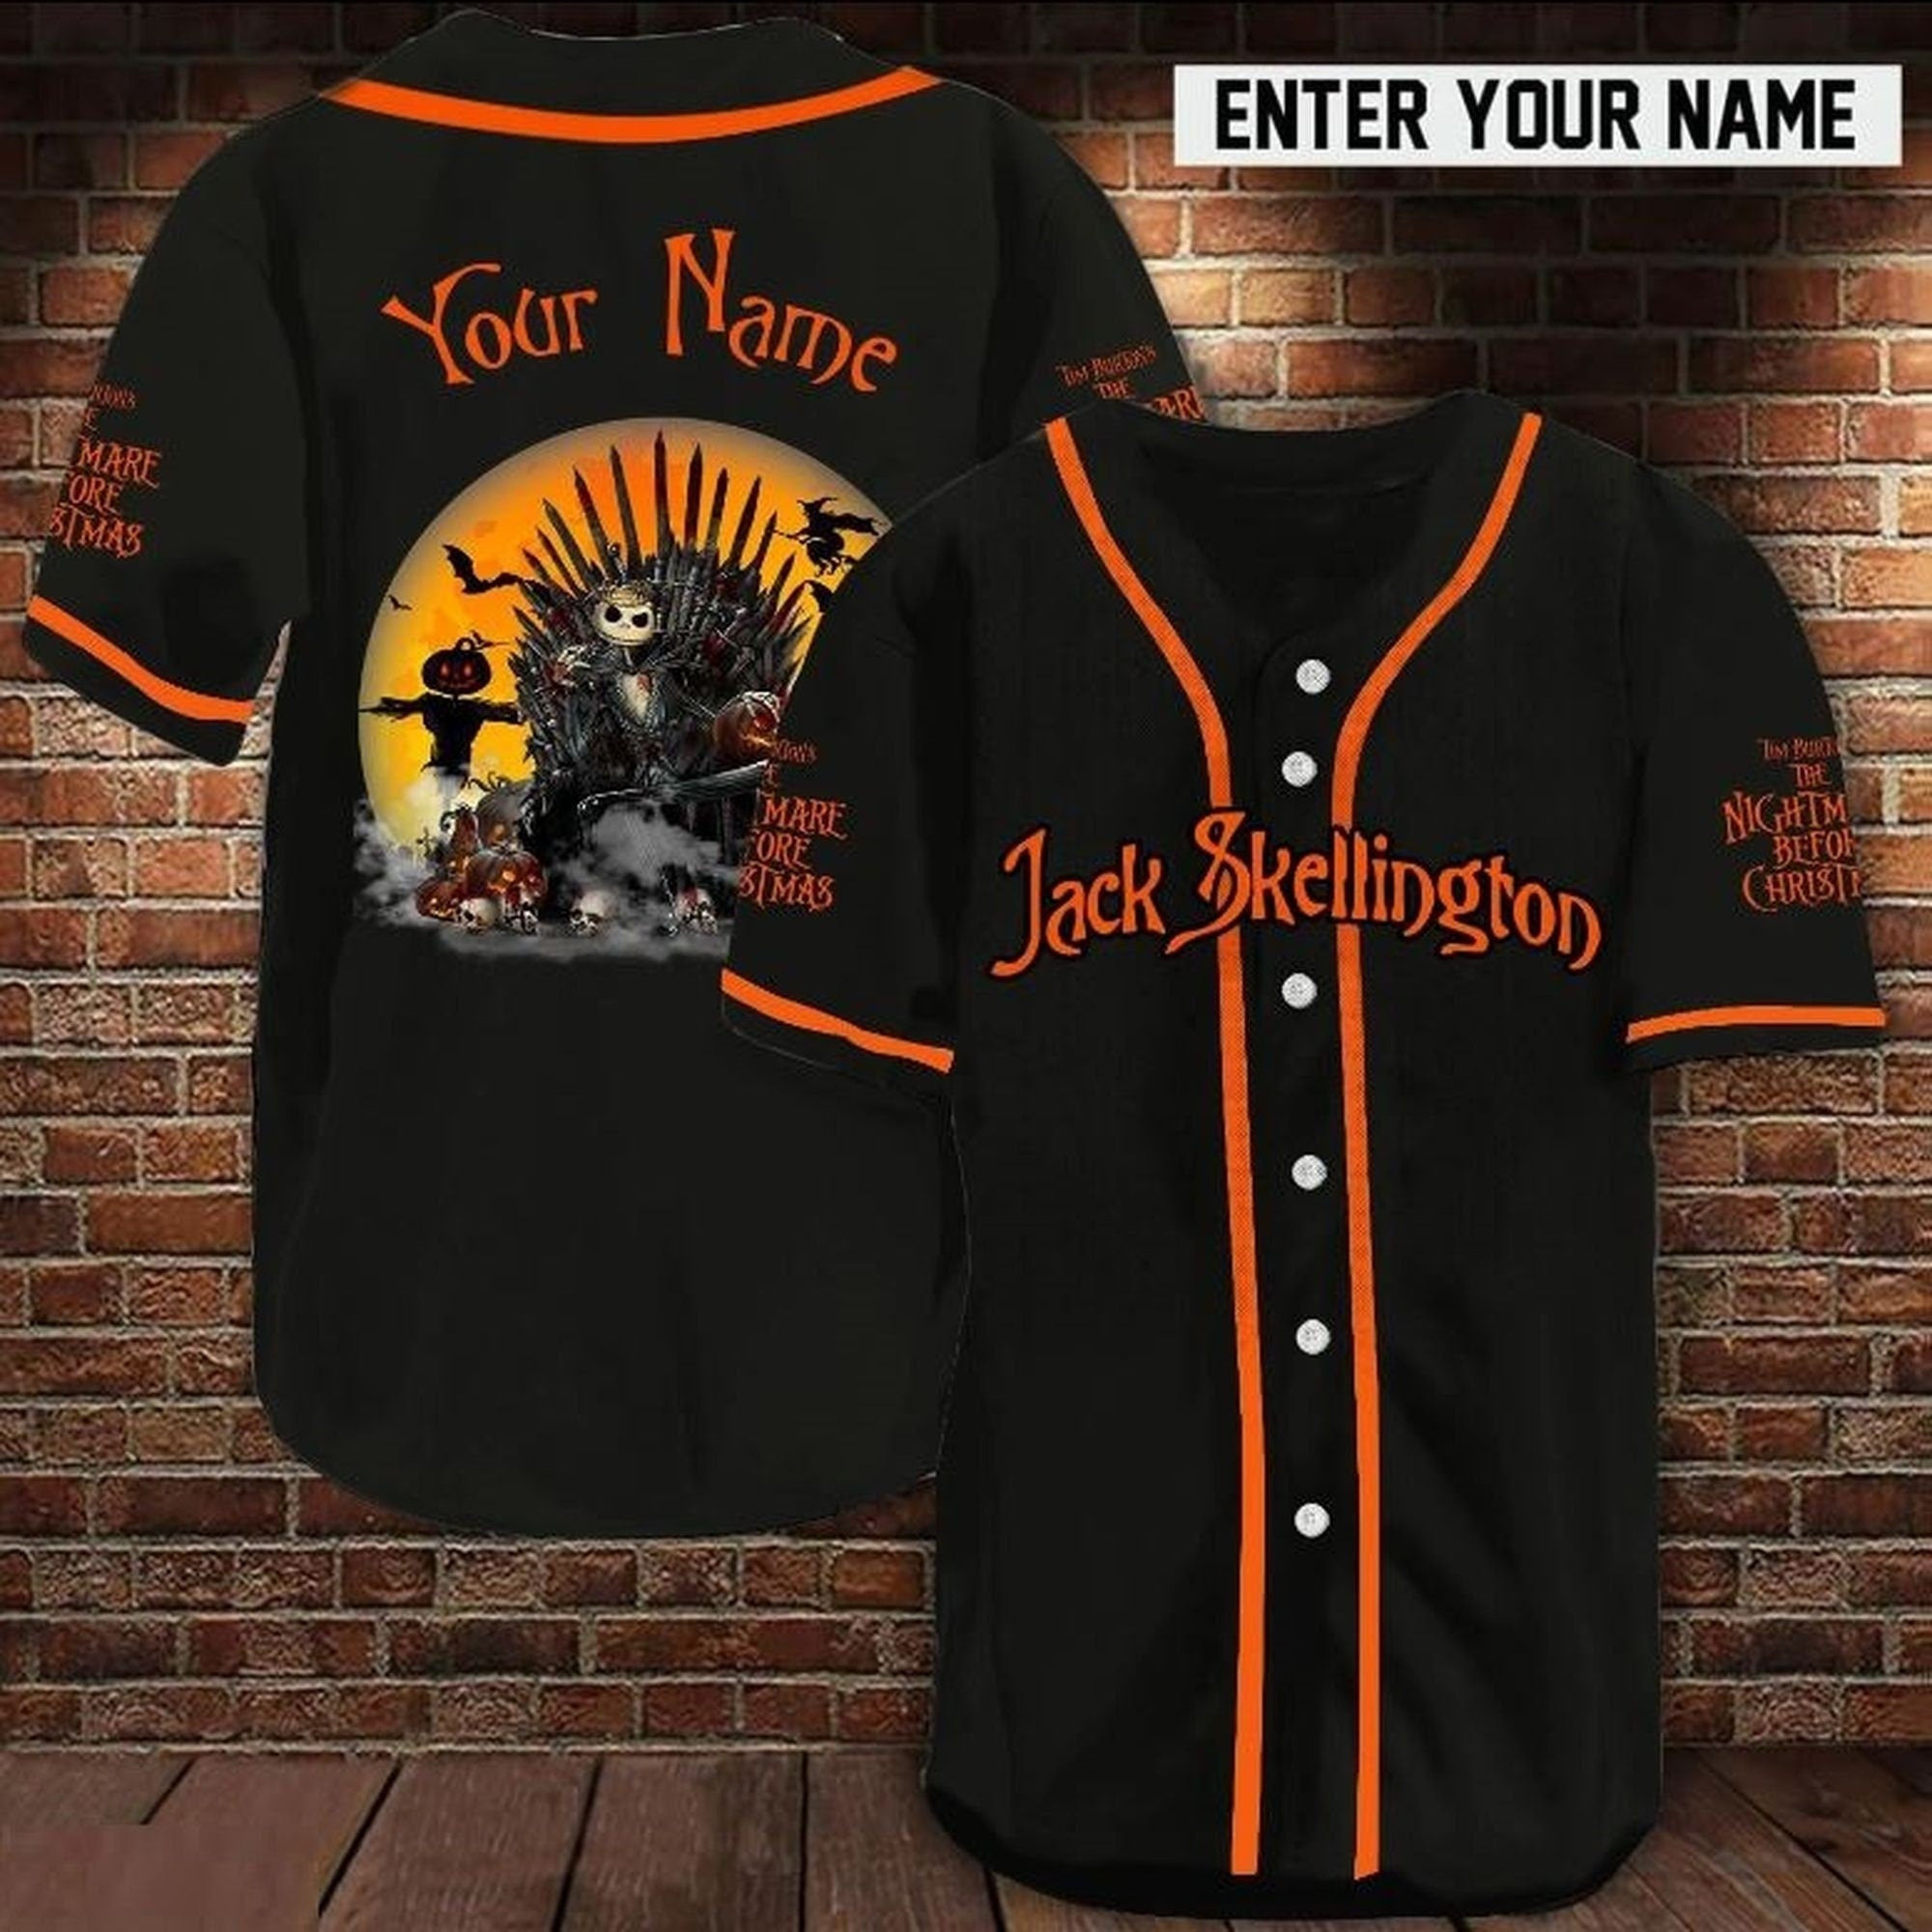 Personalized Name Jack Skellington Halloween Baseball Jersey, Unisex Jersey Shirt for Men Women